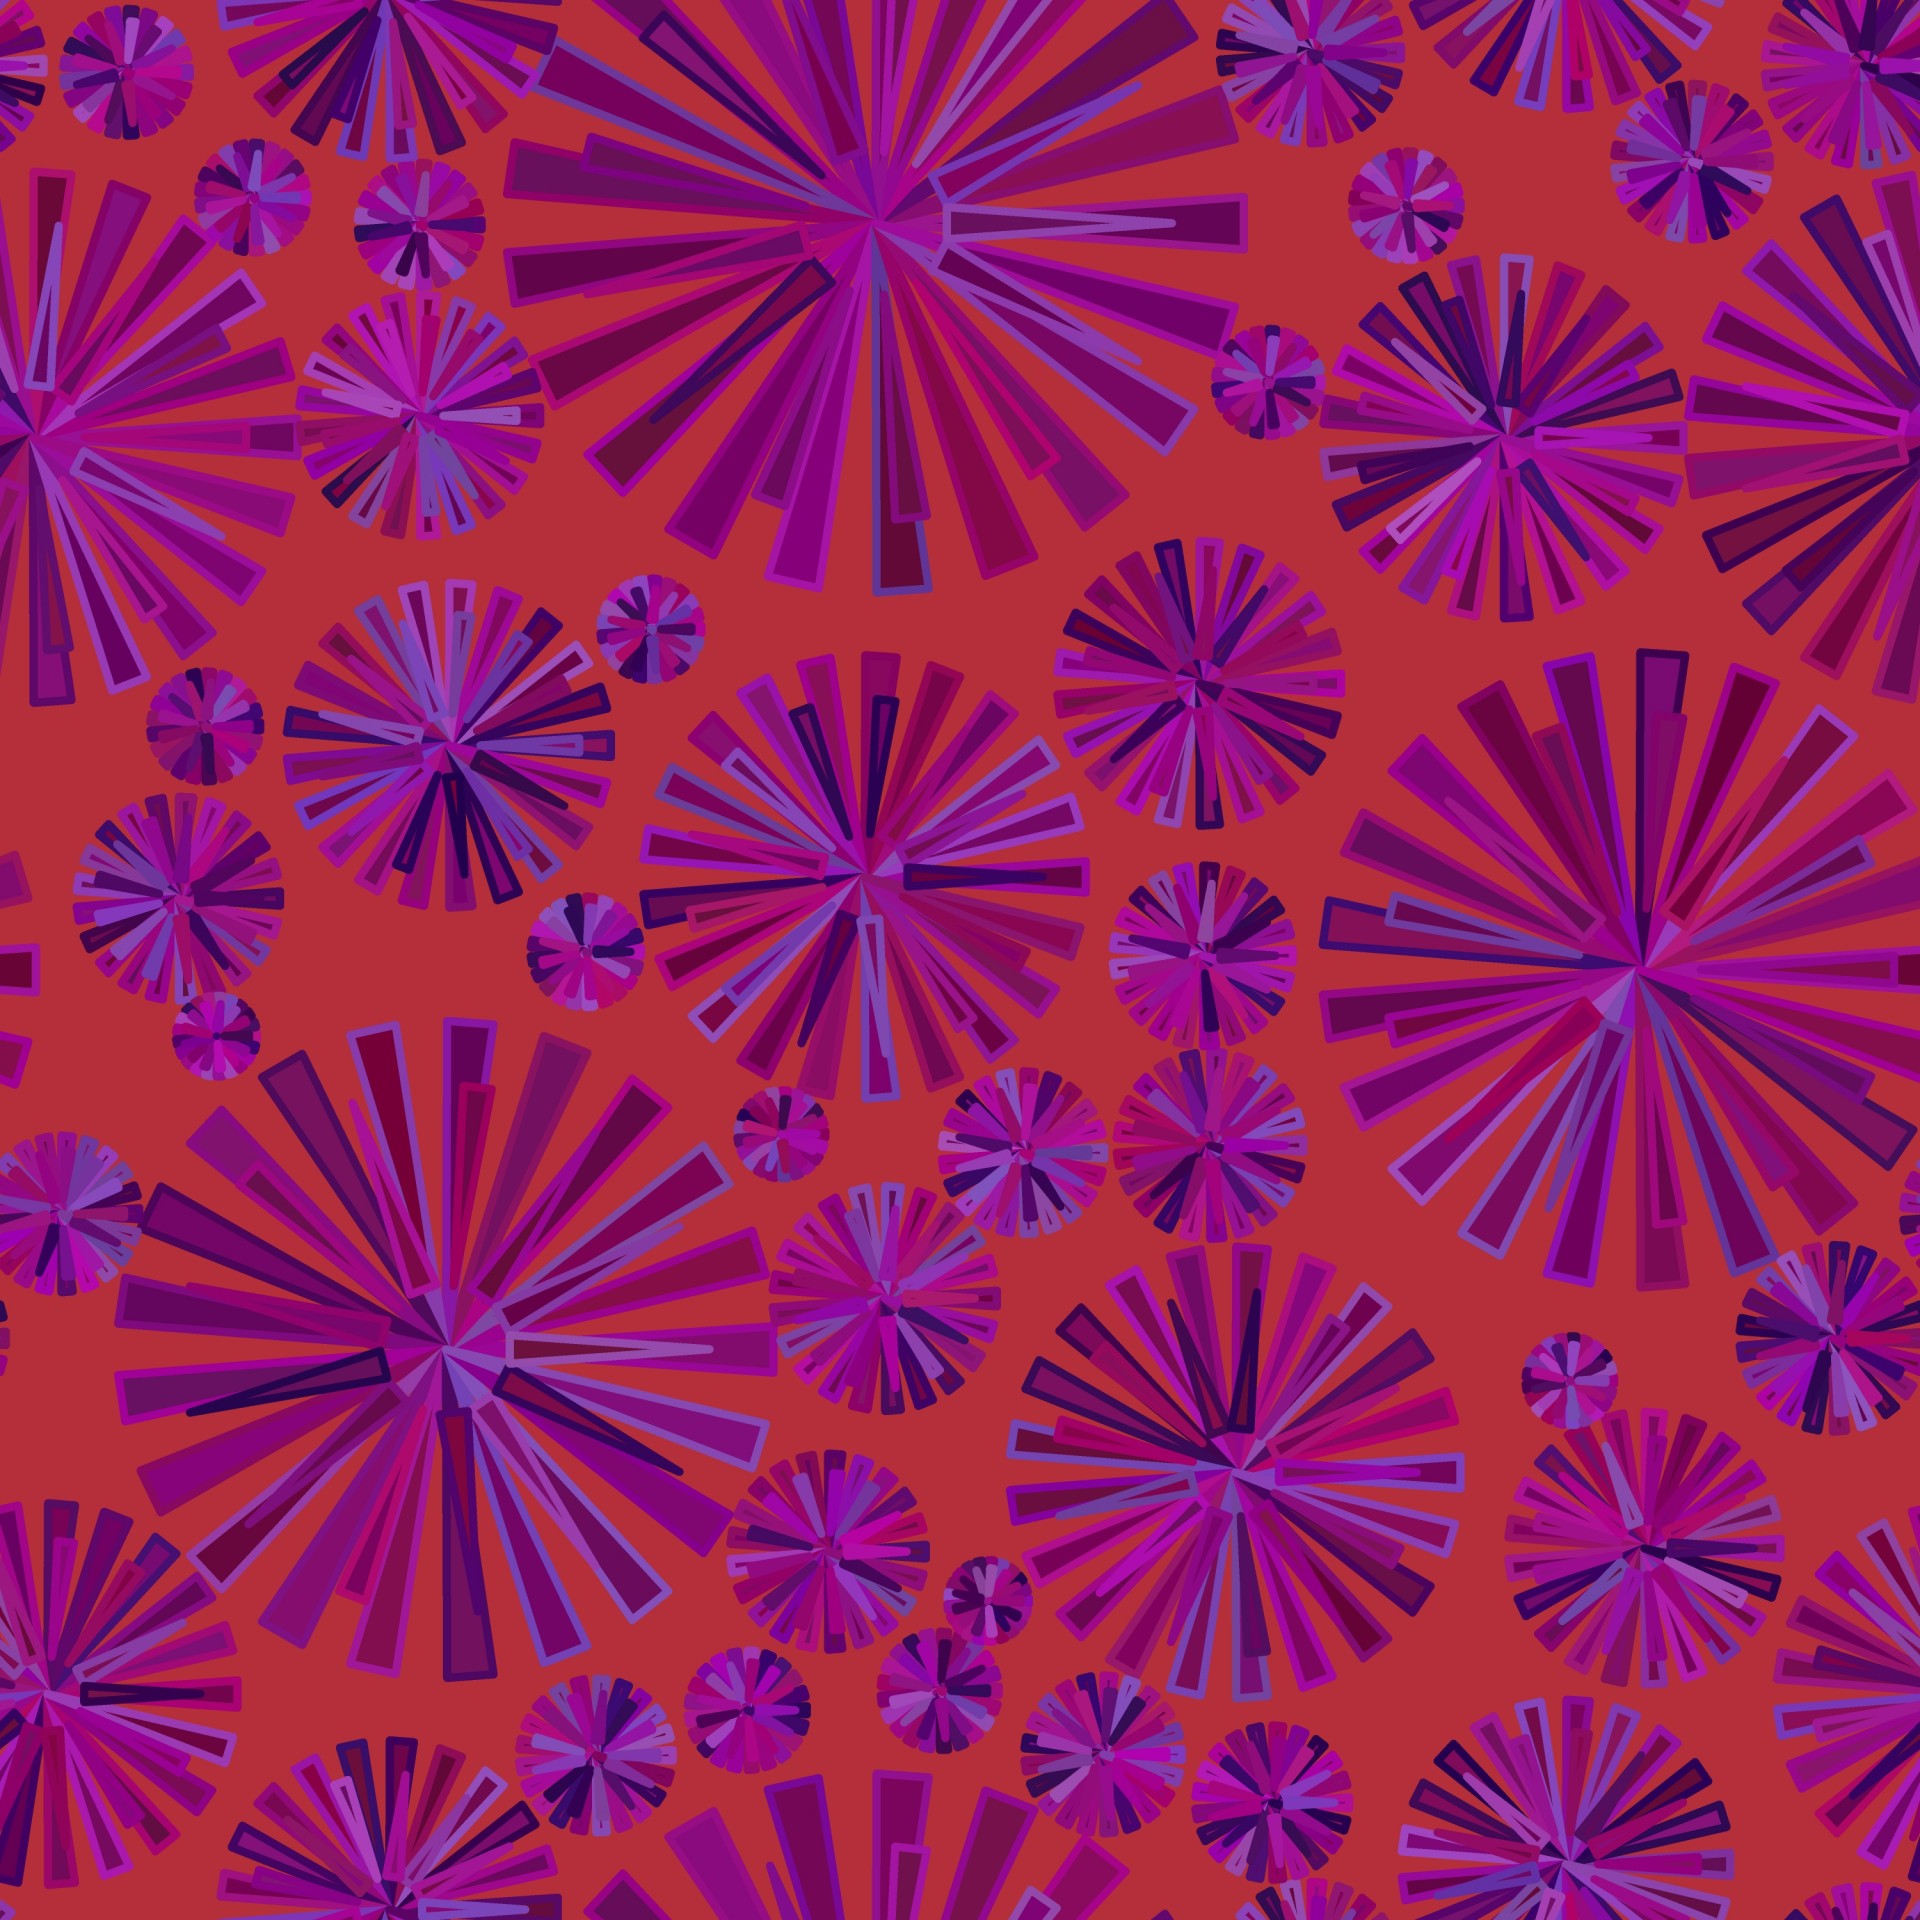 Flori violet